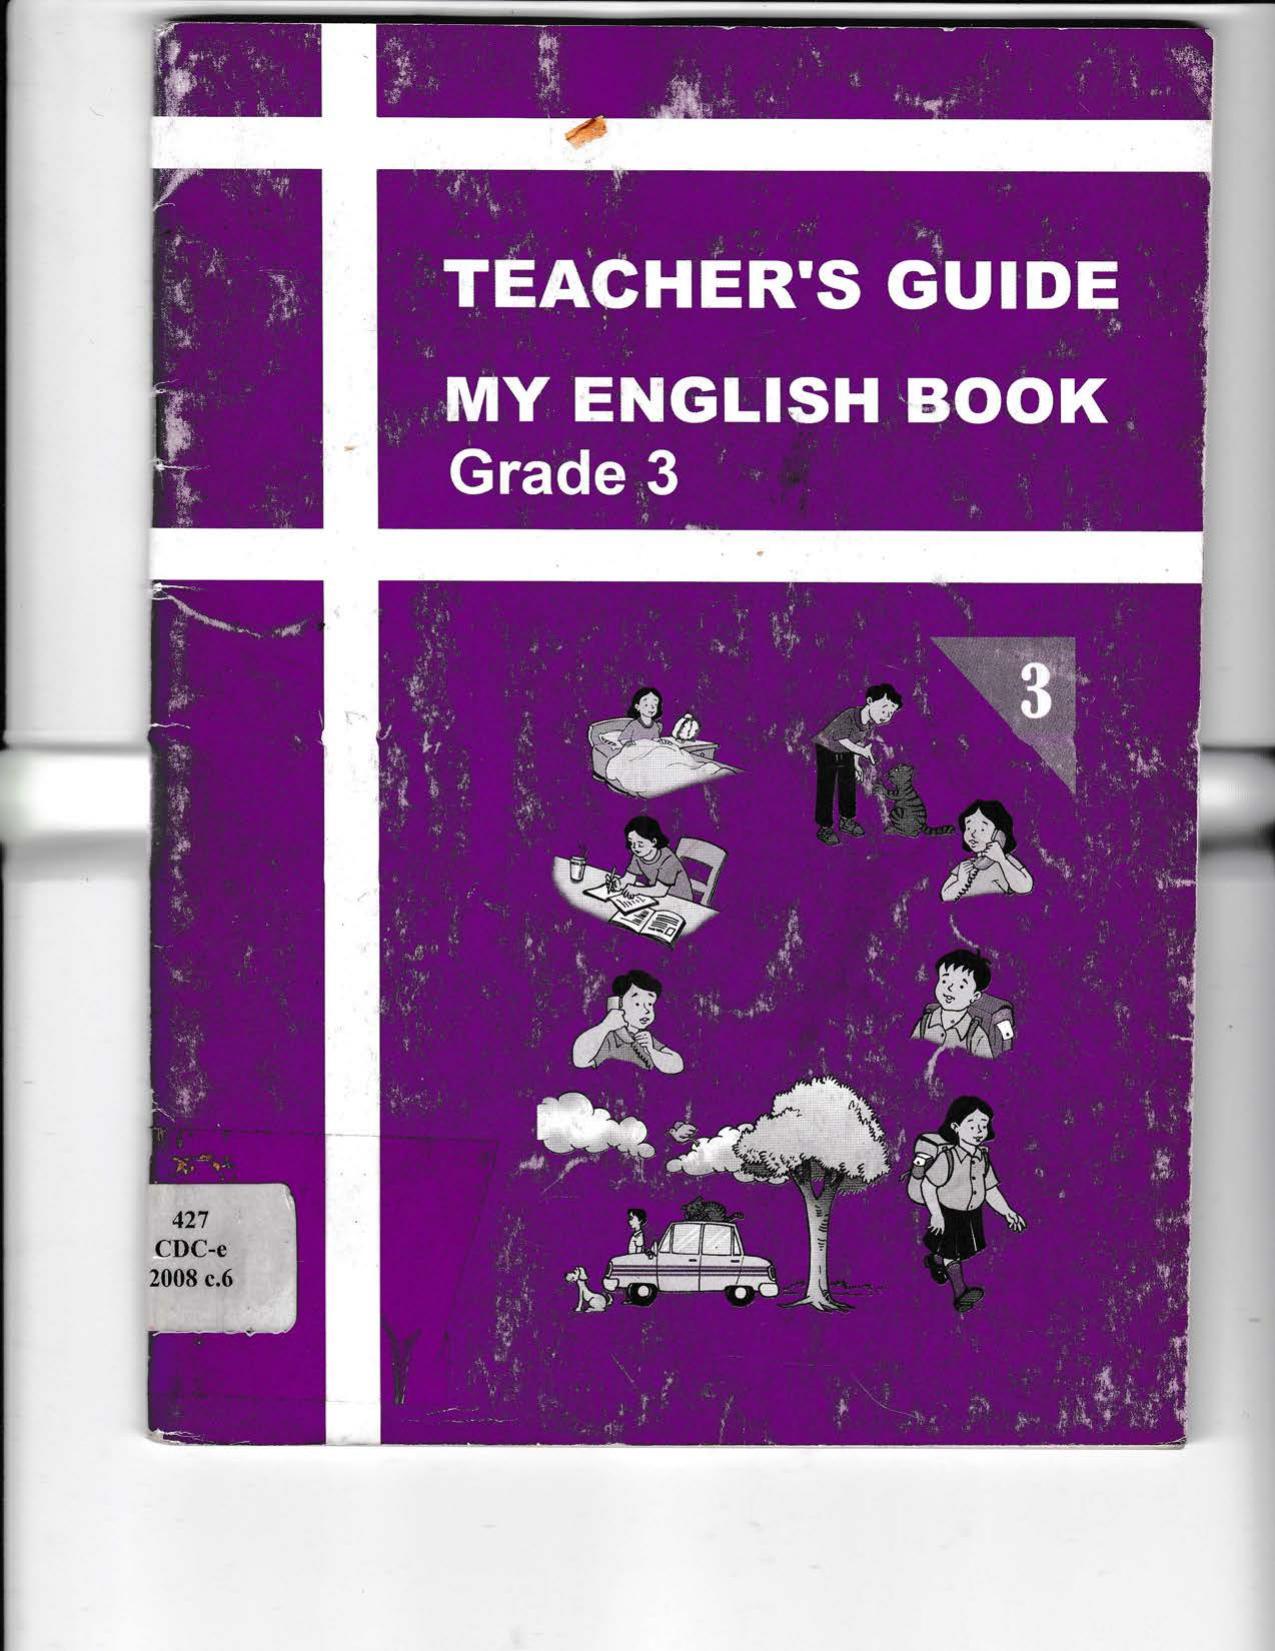 CDC 2008 - My Enghish Teachers Guide Grade 3